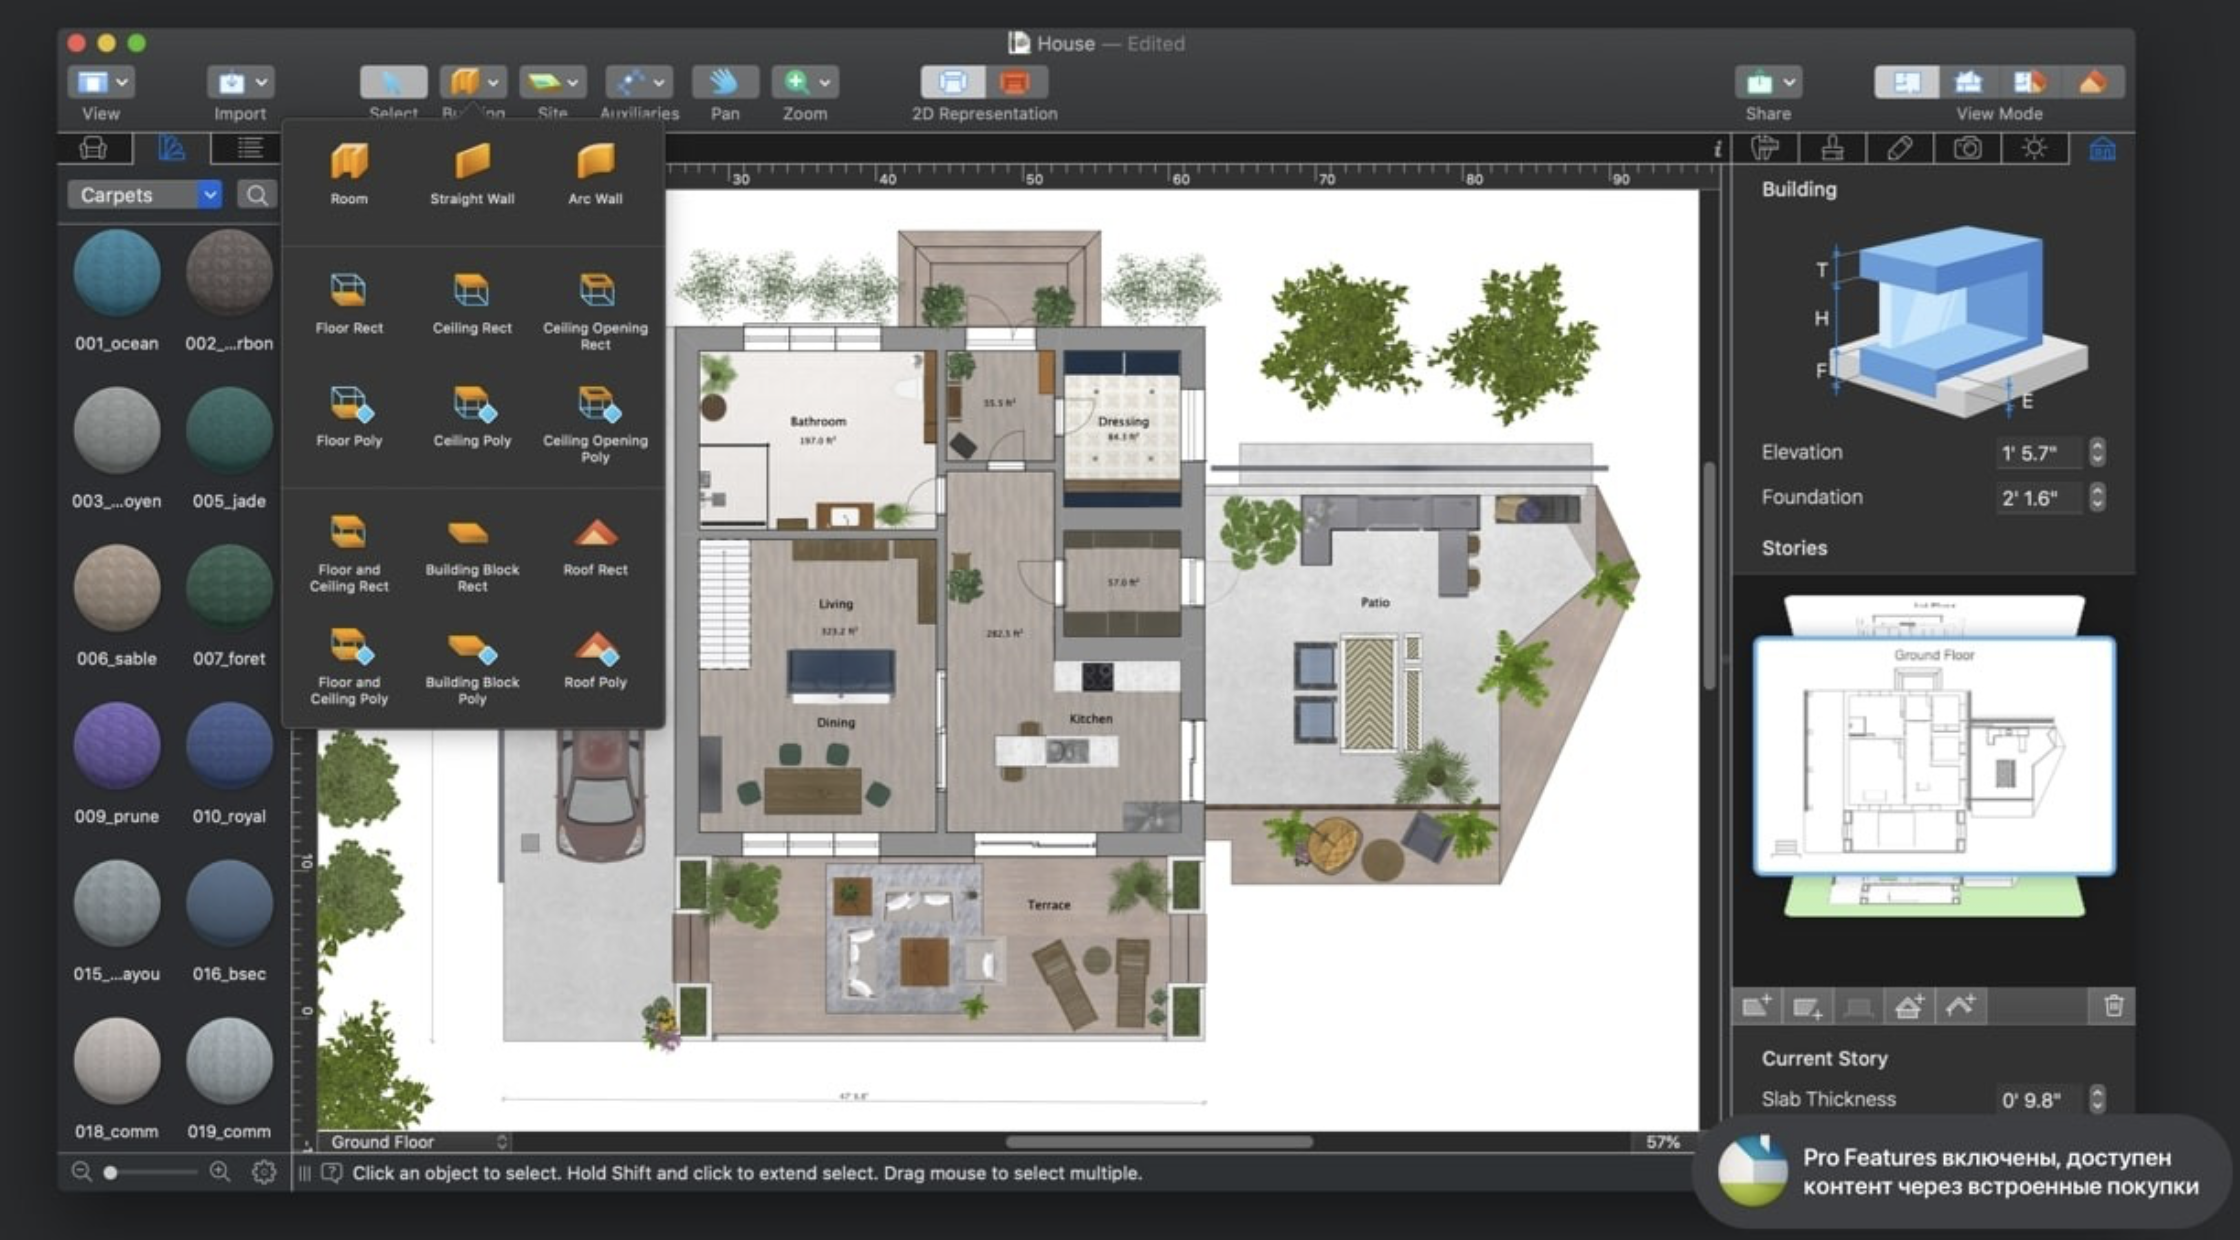 Live Home 3D Pro for mac v4.8.4 3D家庭室内设计工具 破解版-1